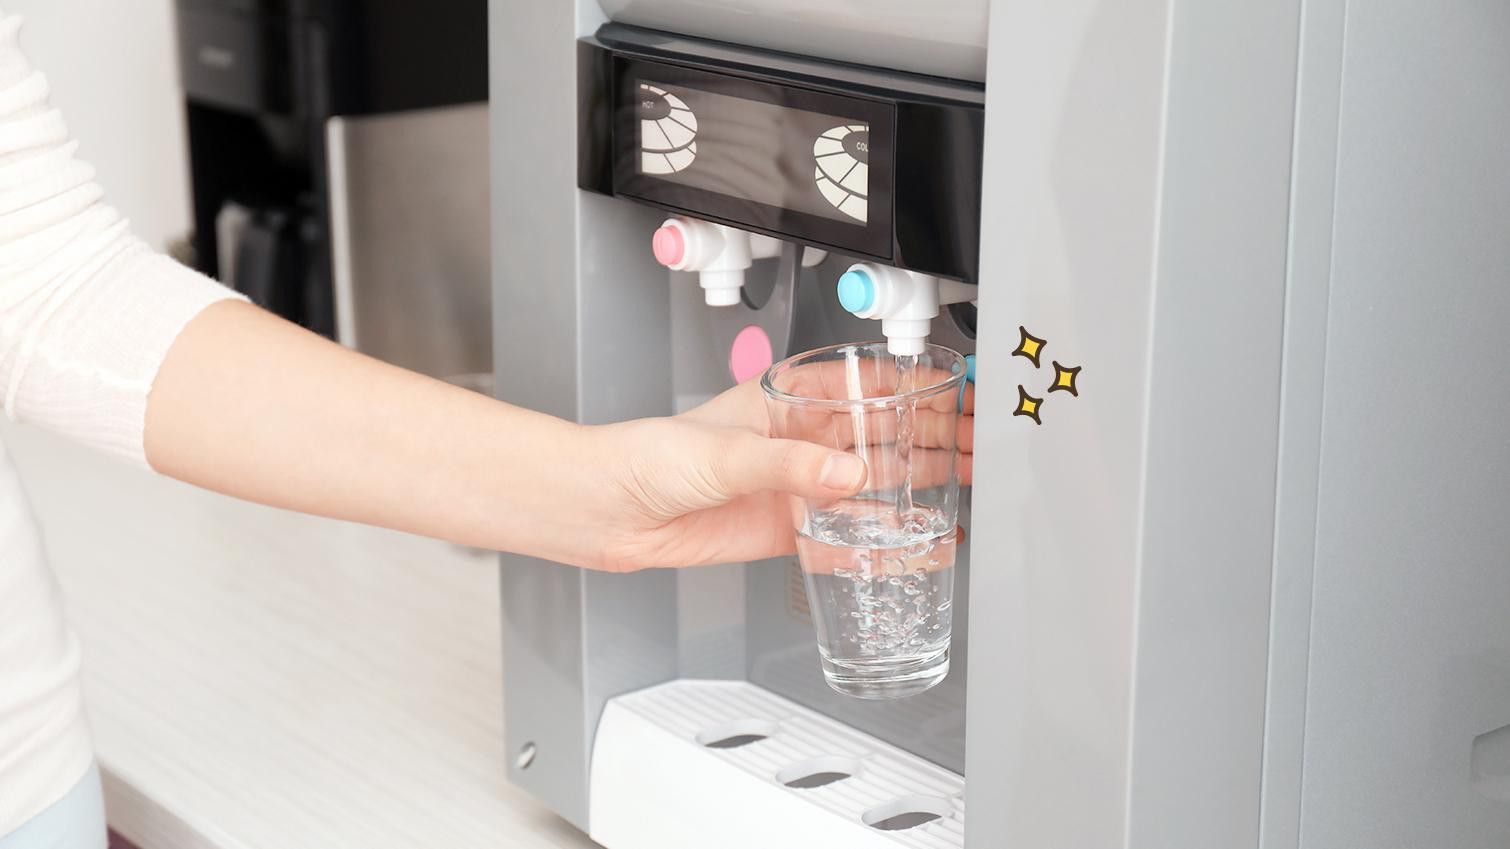 Hilangkan Bakteri yang Mengendap di Dalam Dispenser Dengan 7 Cara ini